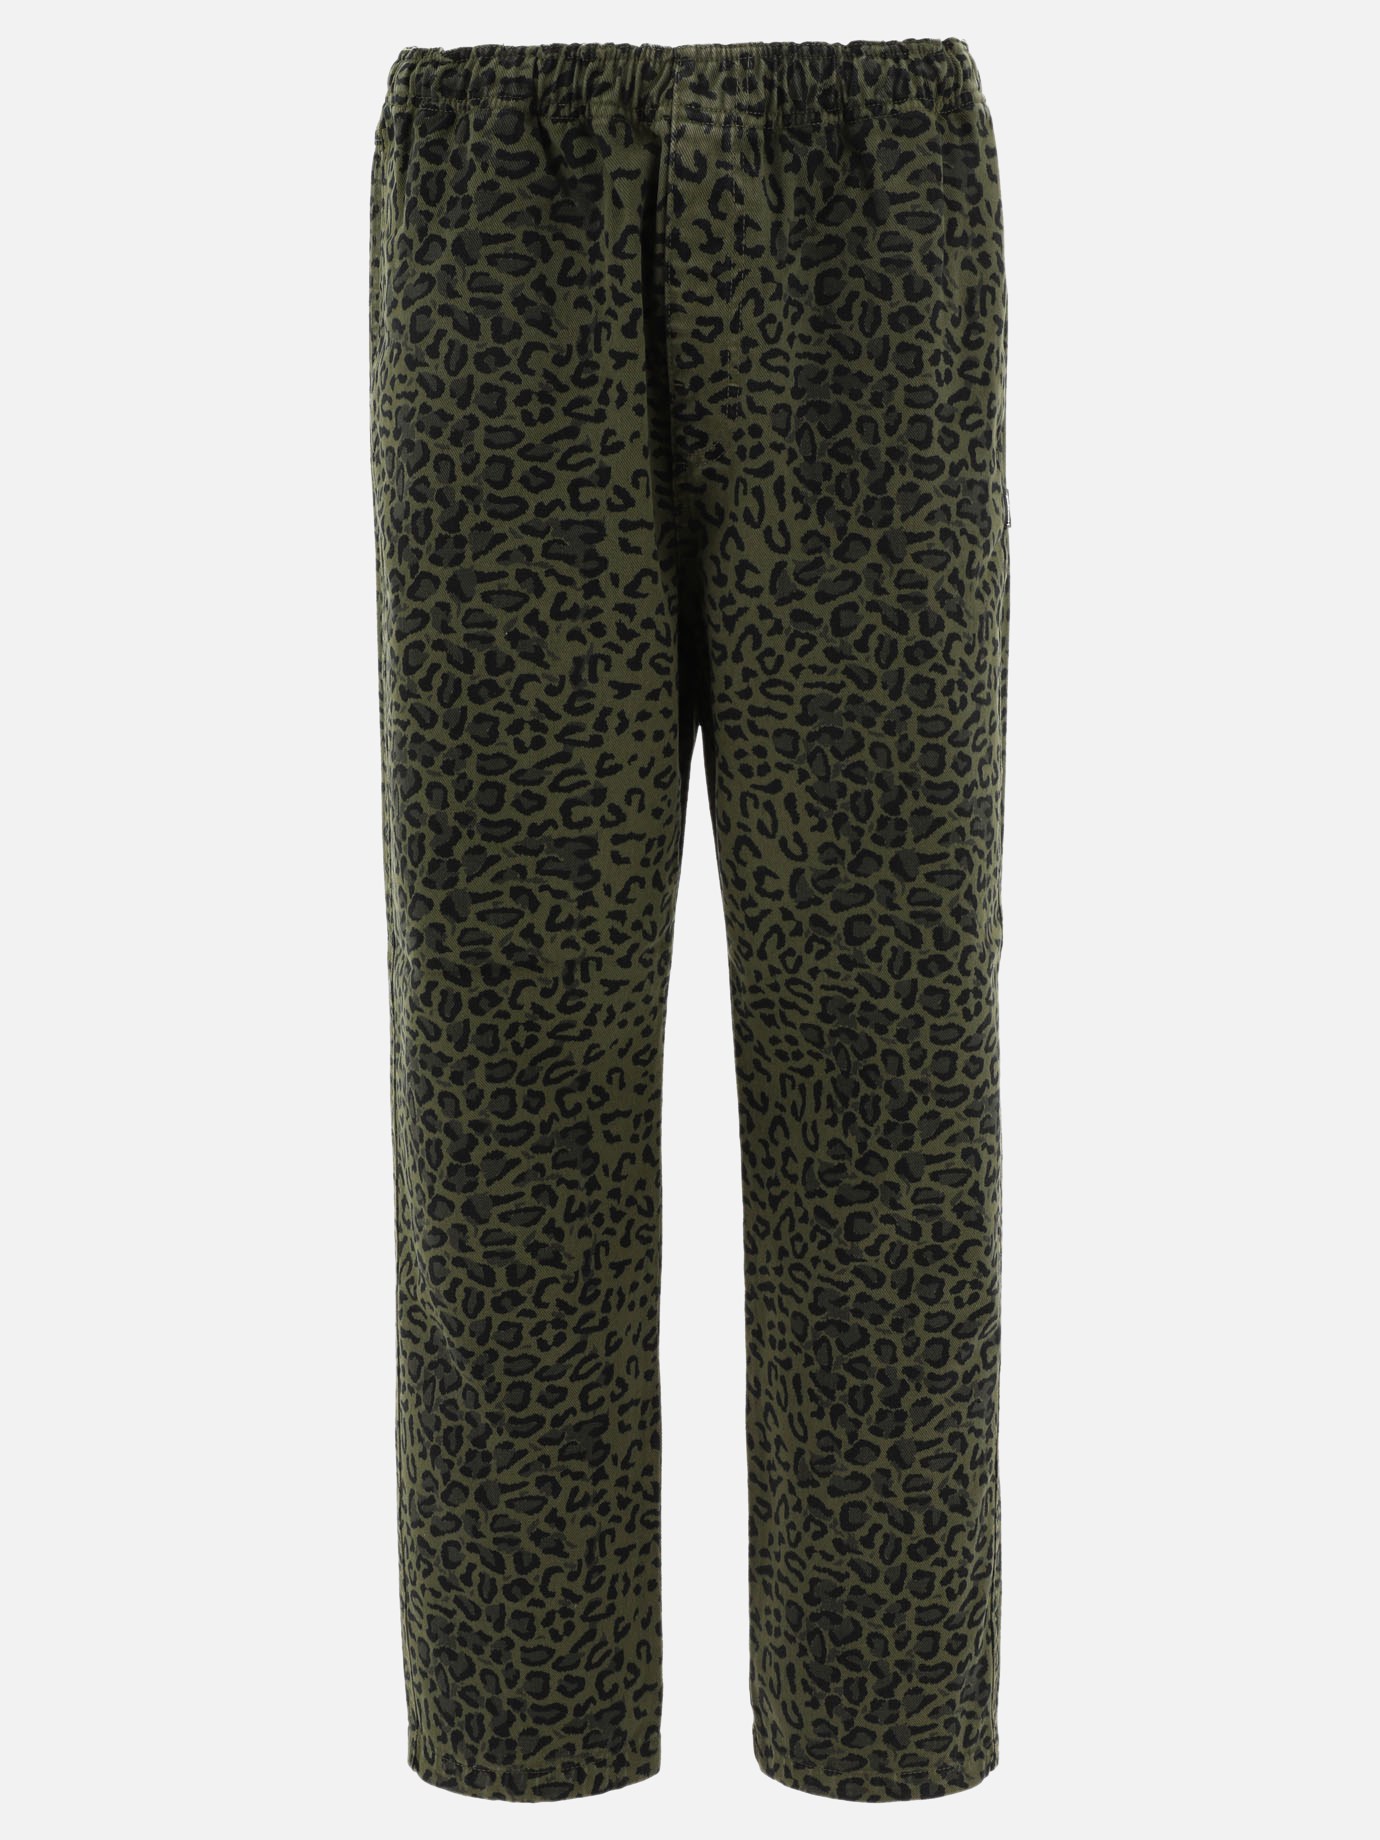 Leopard stretch trousersby Stüssy - 1